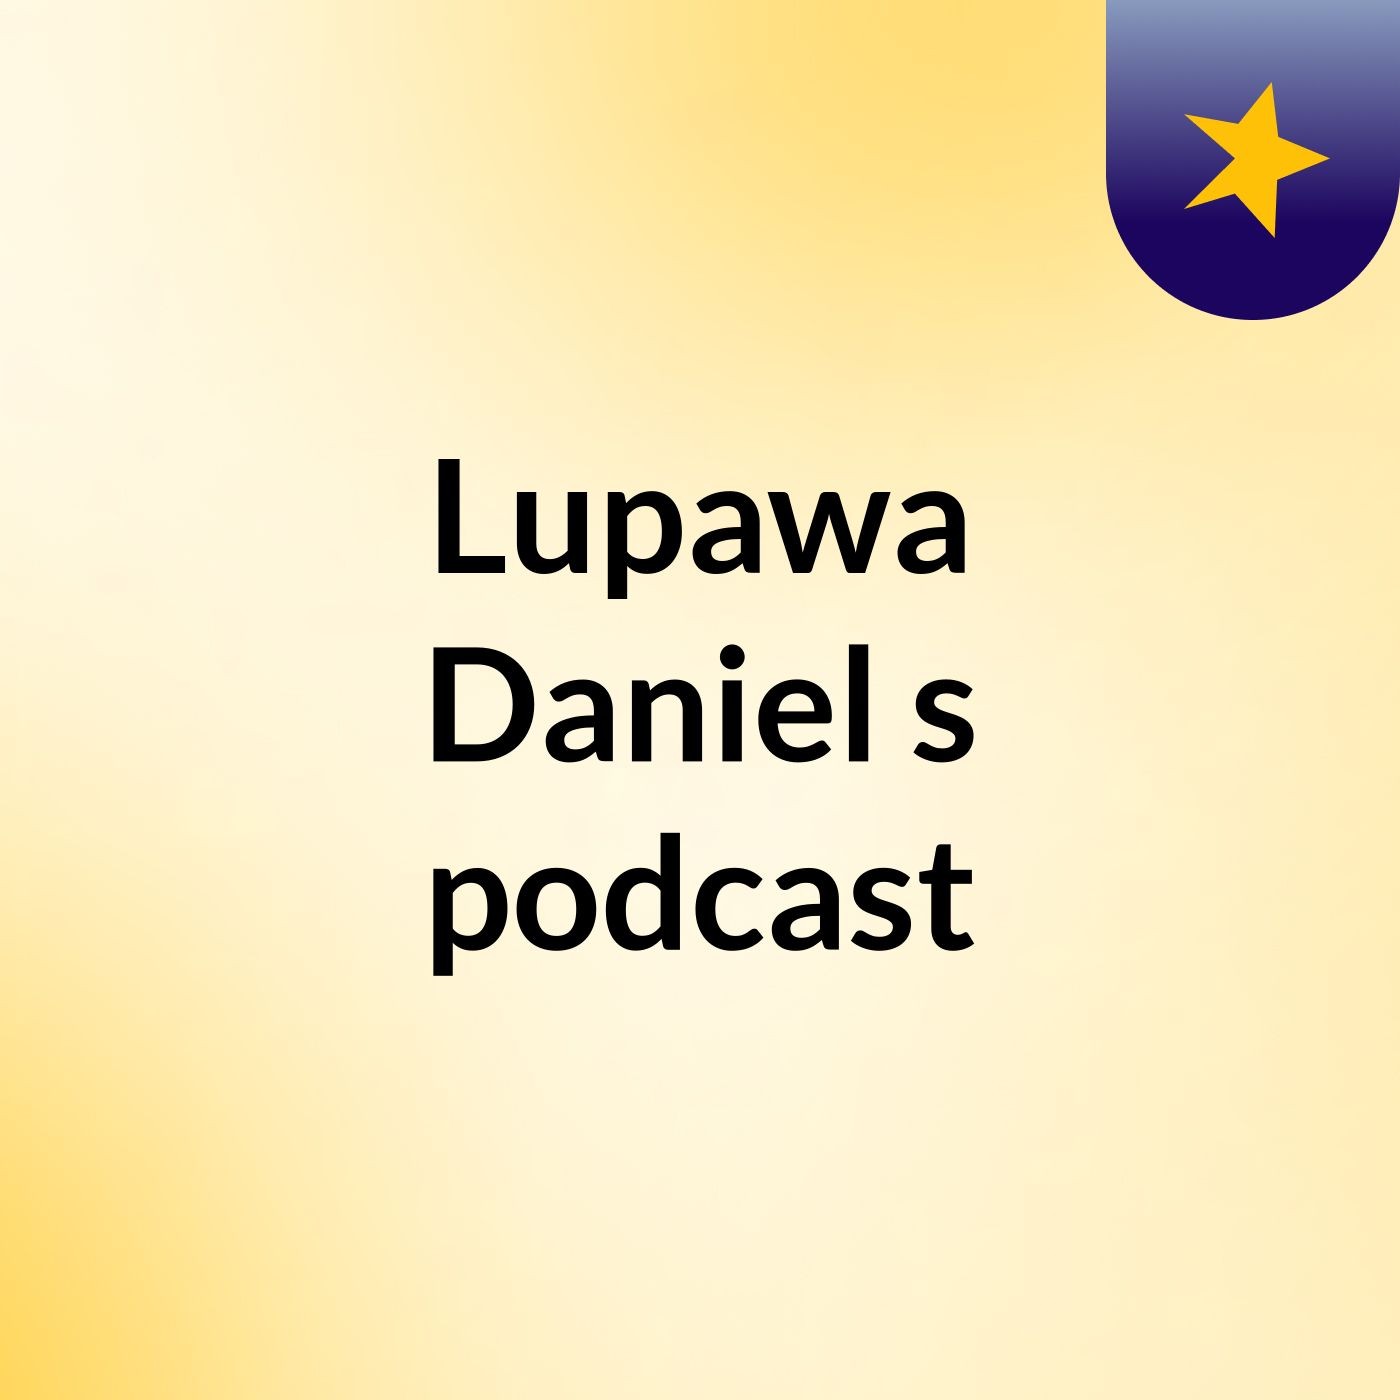 Episode 5 - Lupawa Daniel's podcast